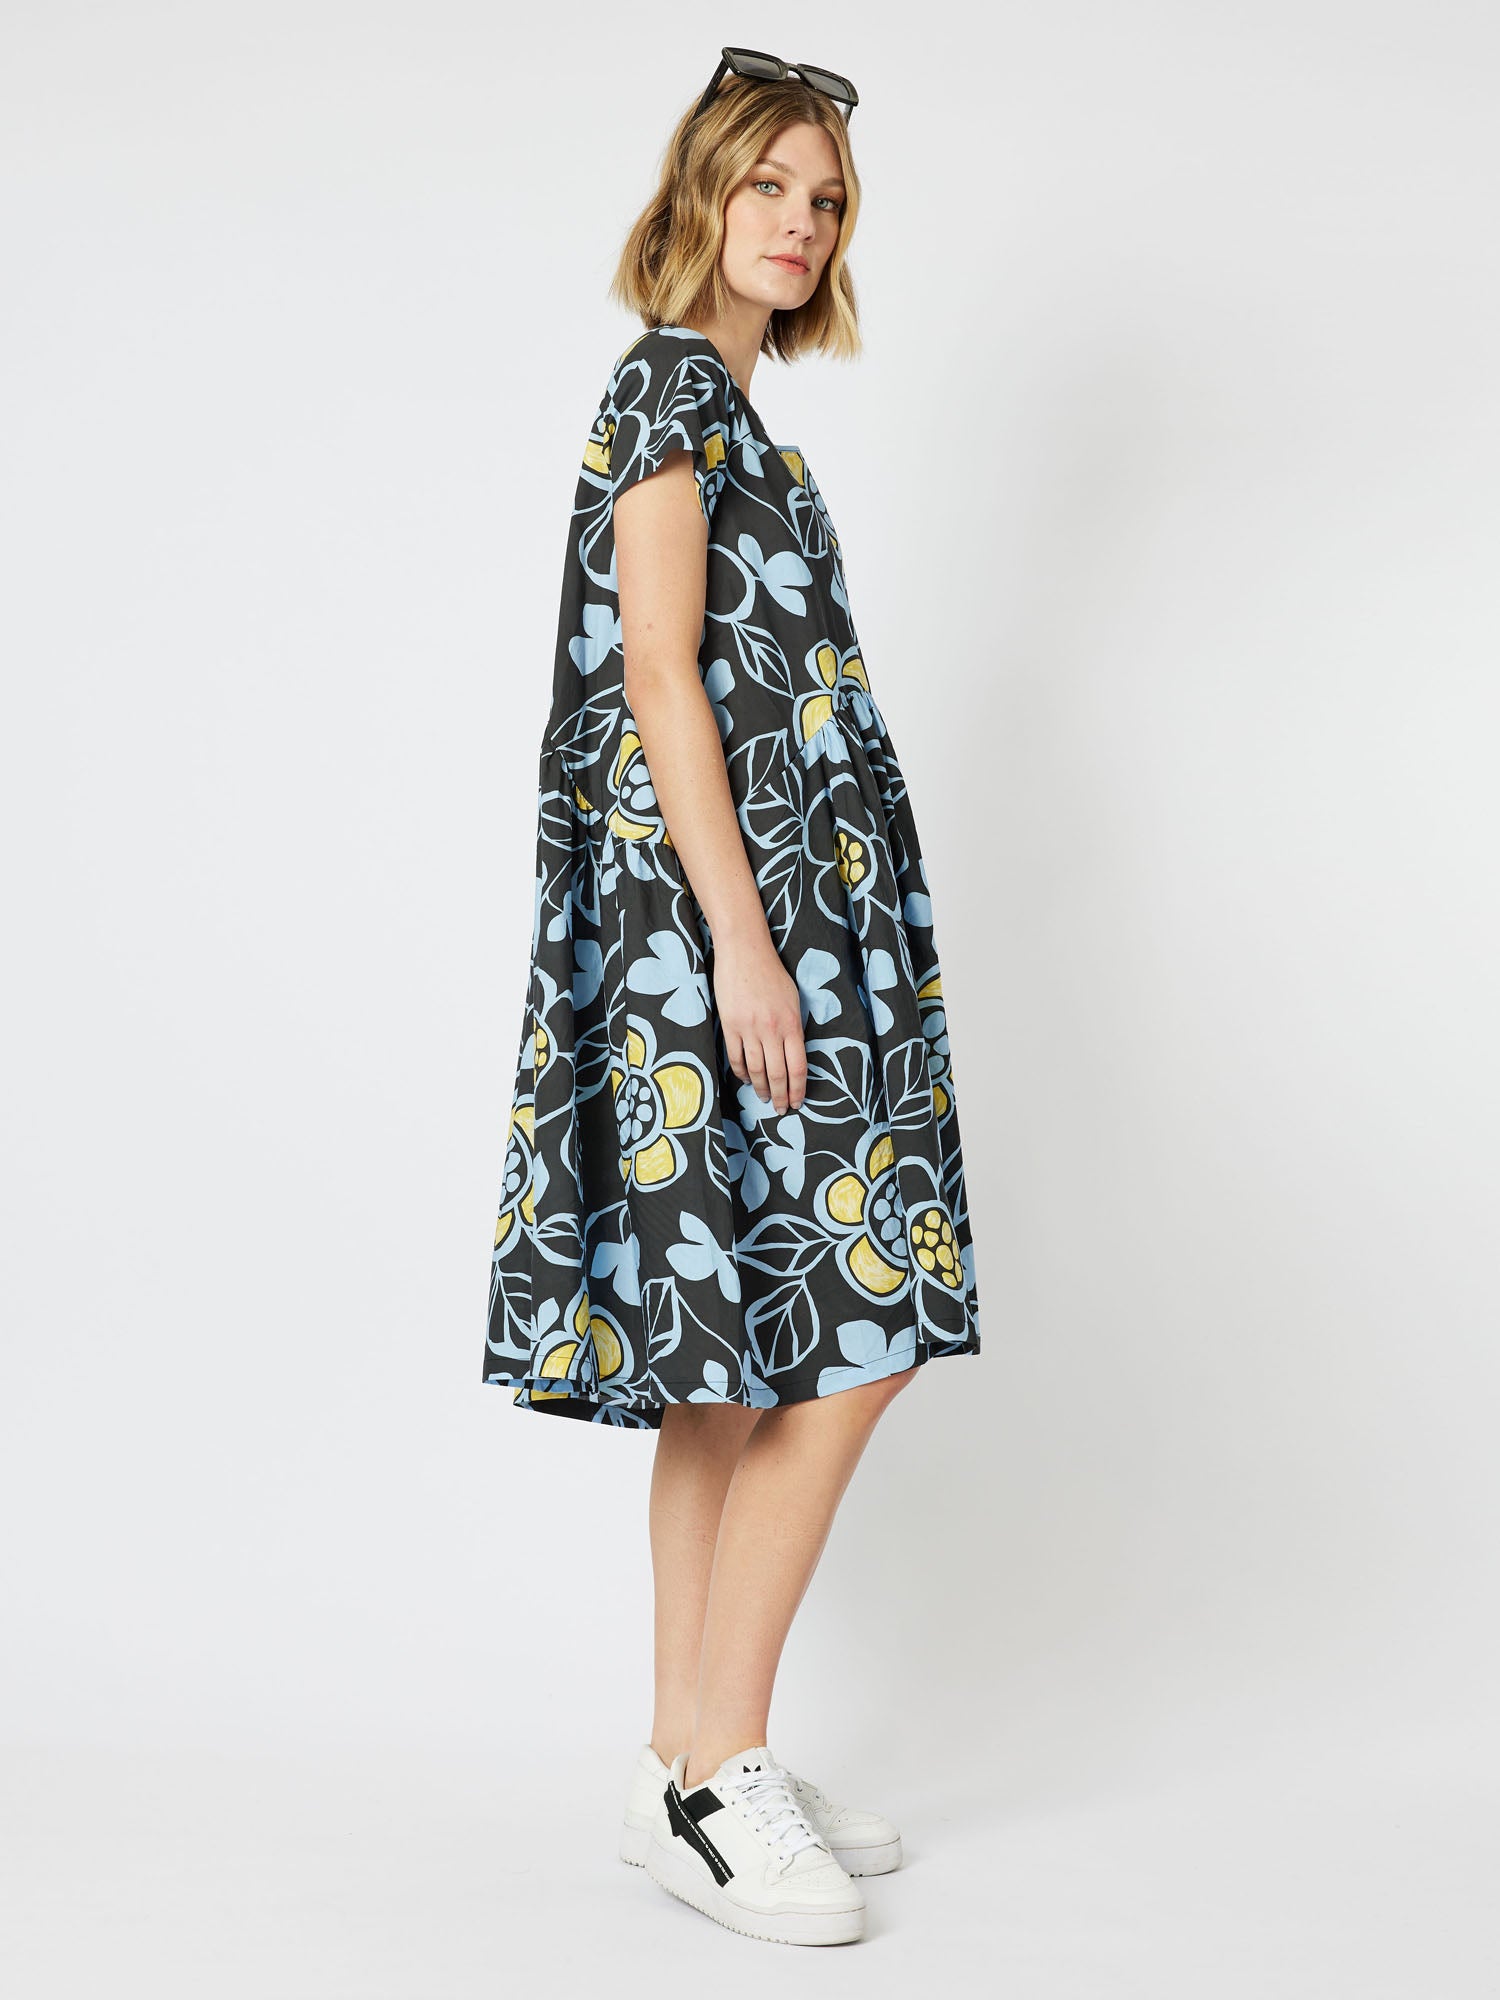 Daisy Chain Cotton Print Short Sleeve Dress - Blue